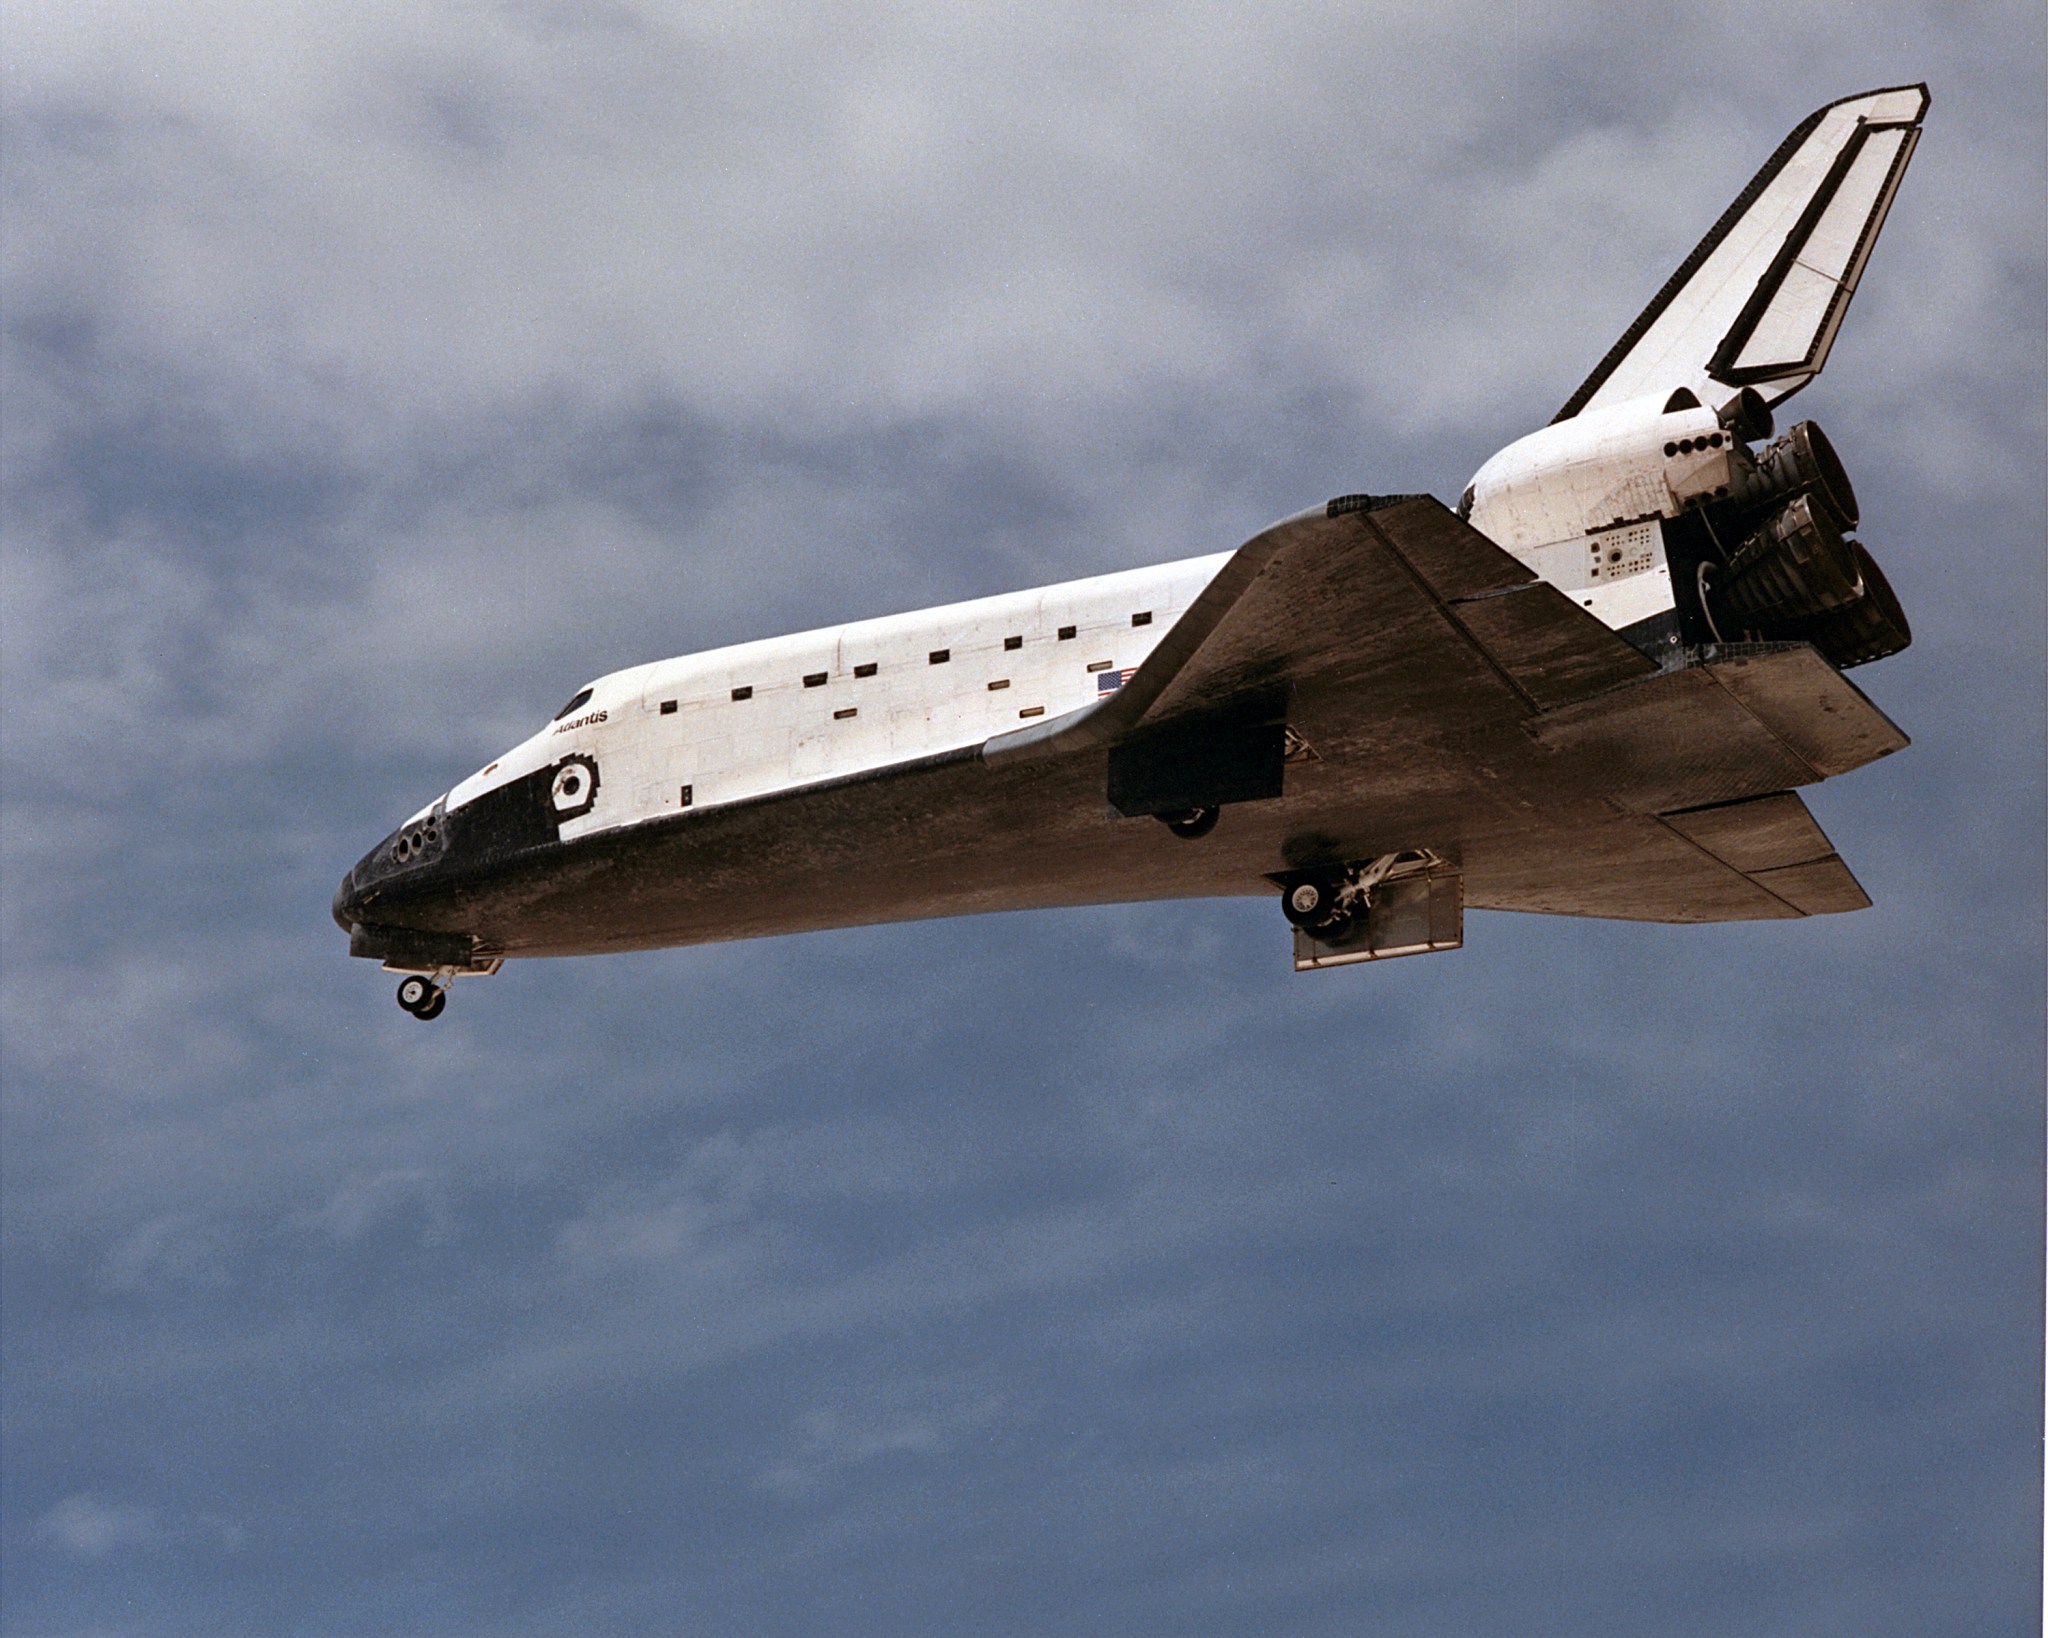 Shuttle Atlantis flying through Earth's atmosphere on way to landing